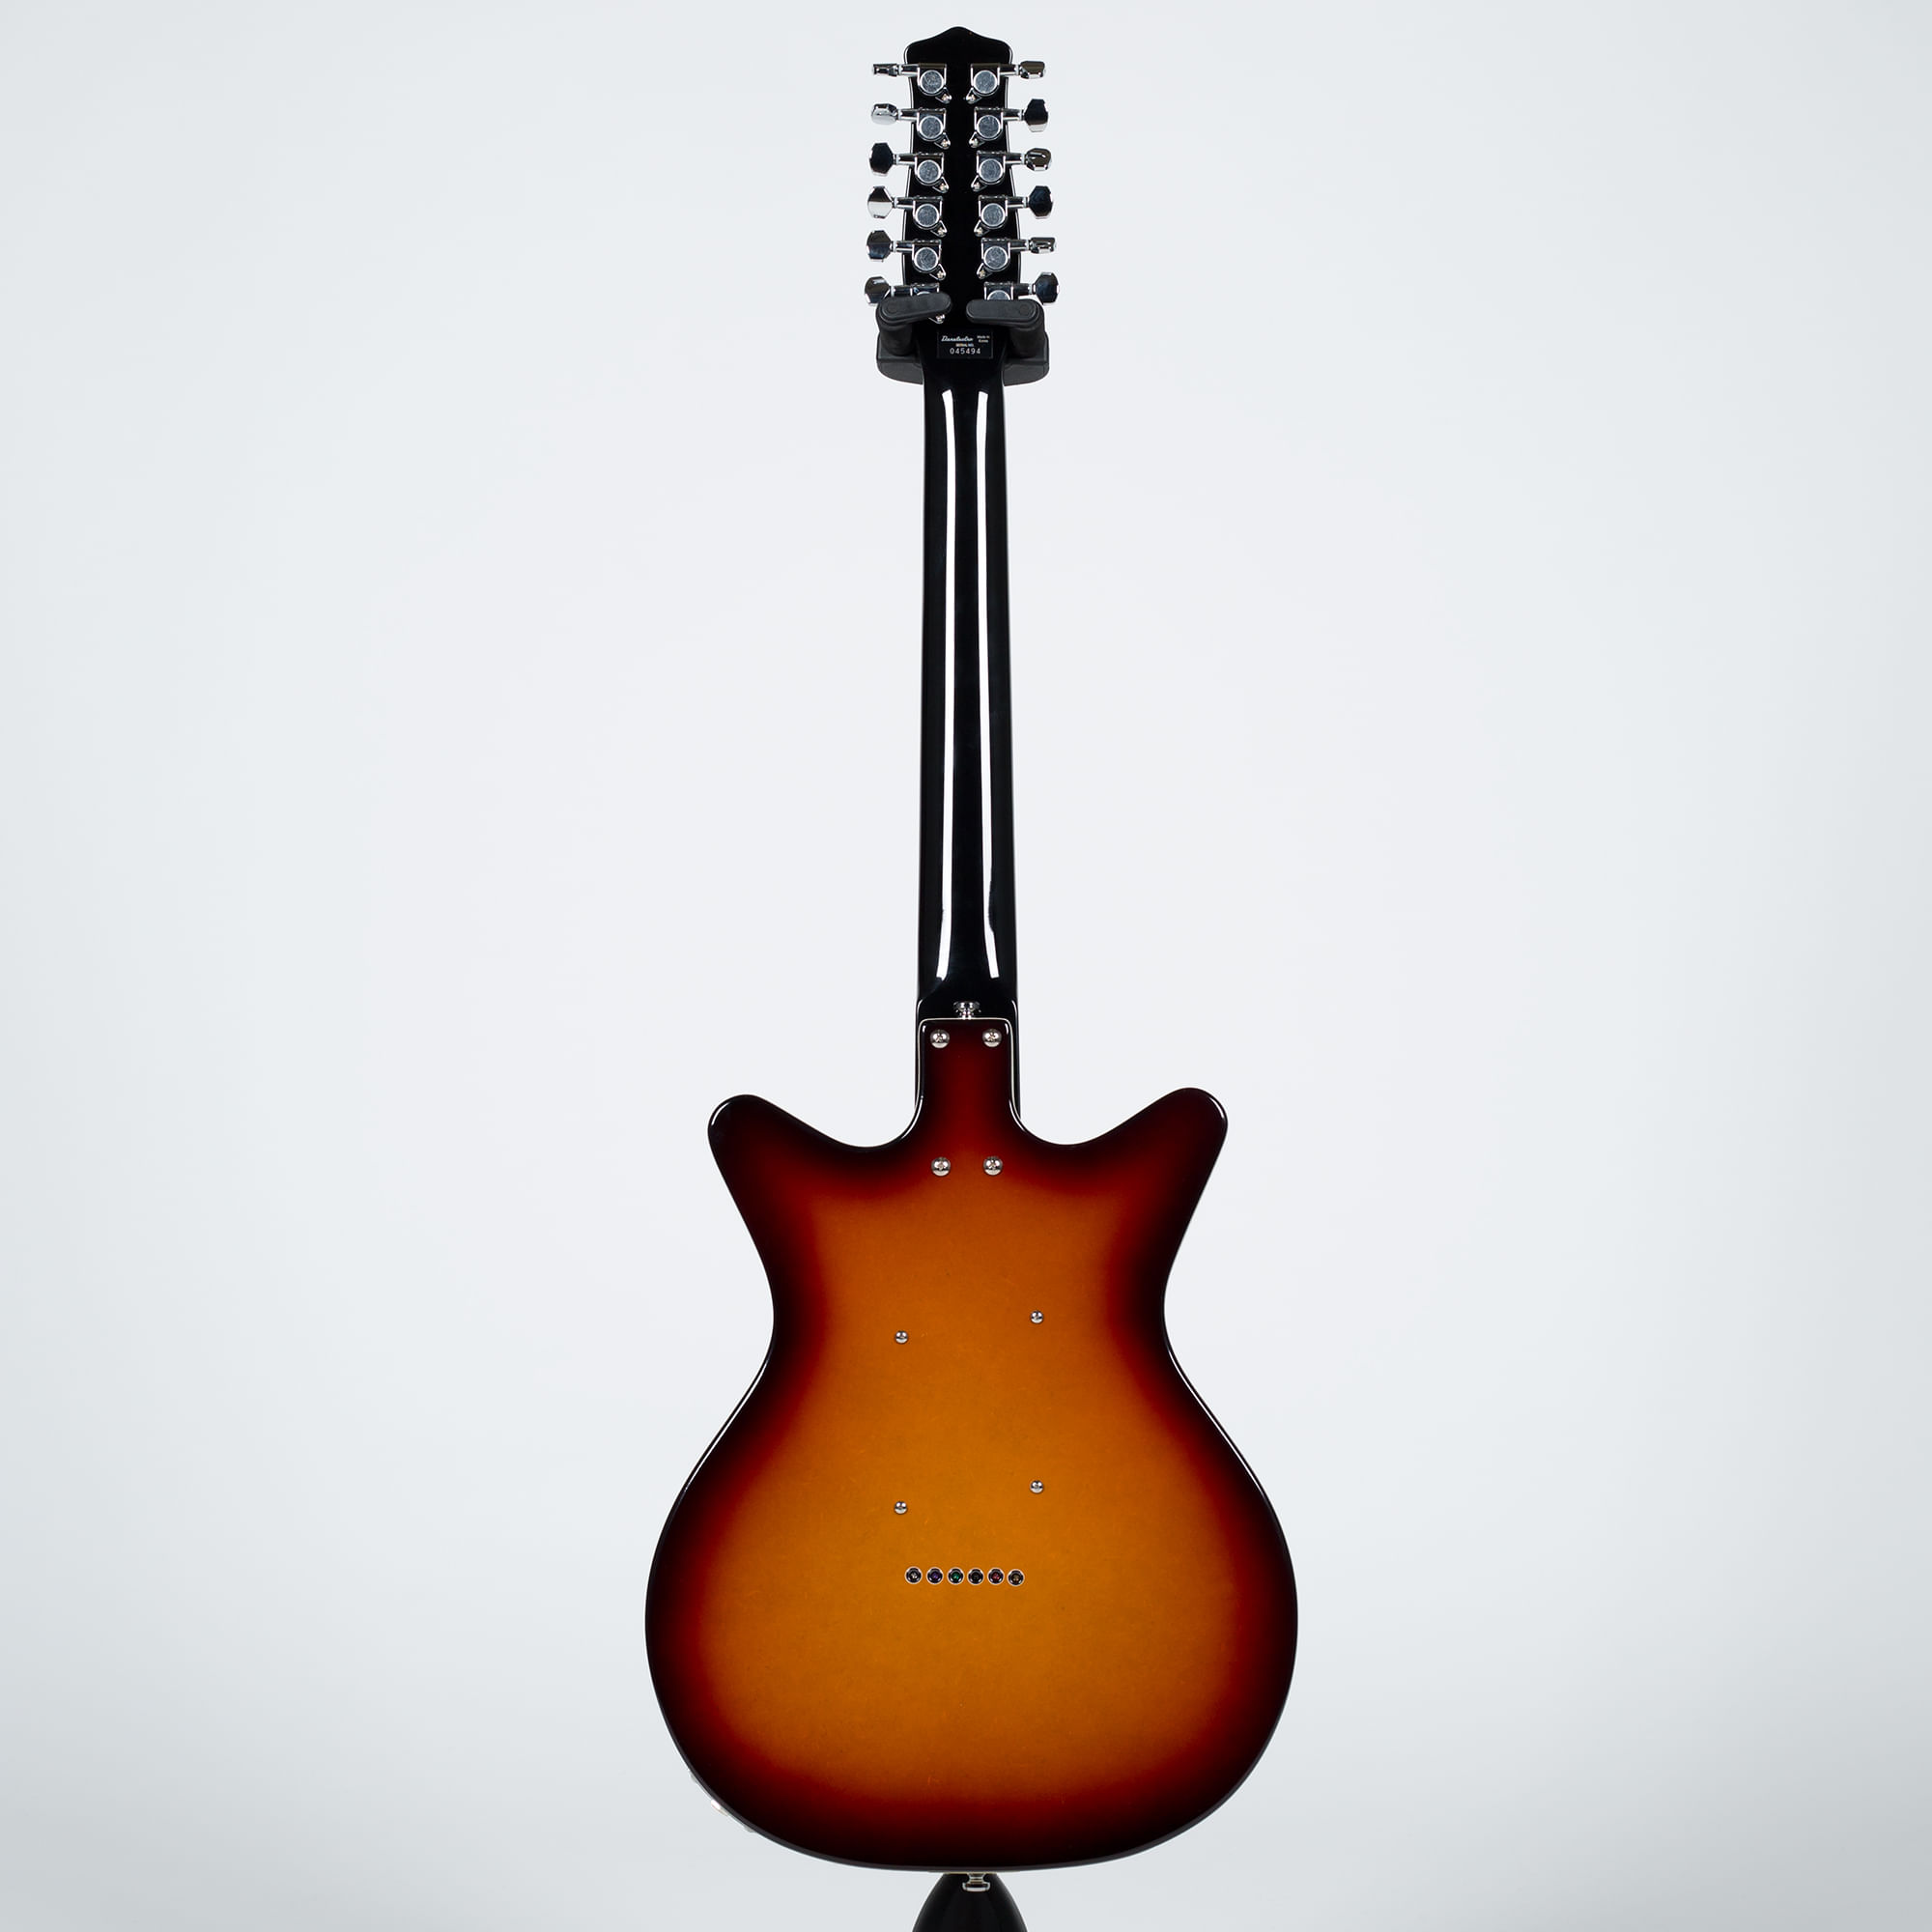 Danelectro D5912 12-String Electric Guitar - Cherry Sunburst - Cosmo Music  | Canada's #1 Music Store - Shop, Rent, Repair